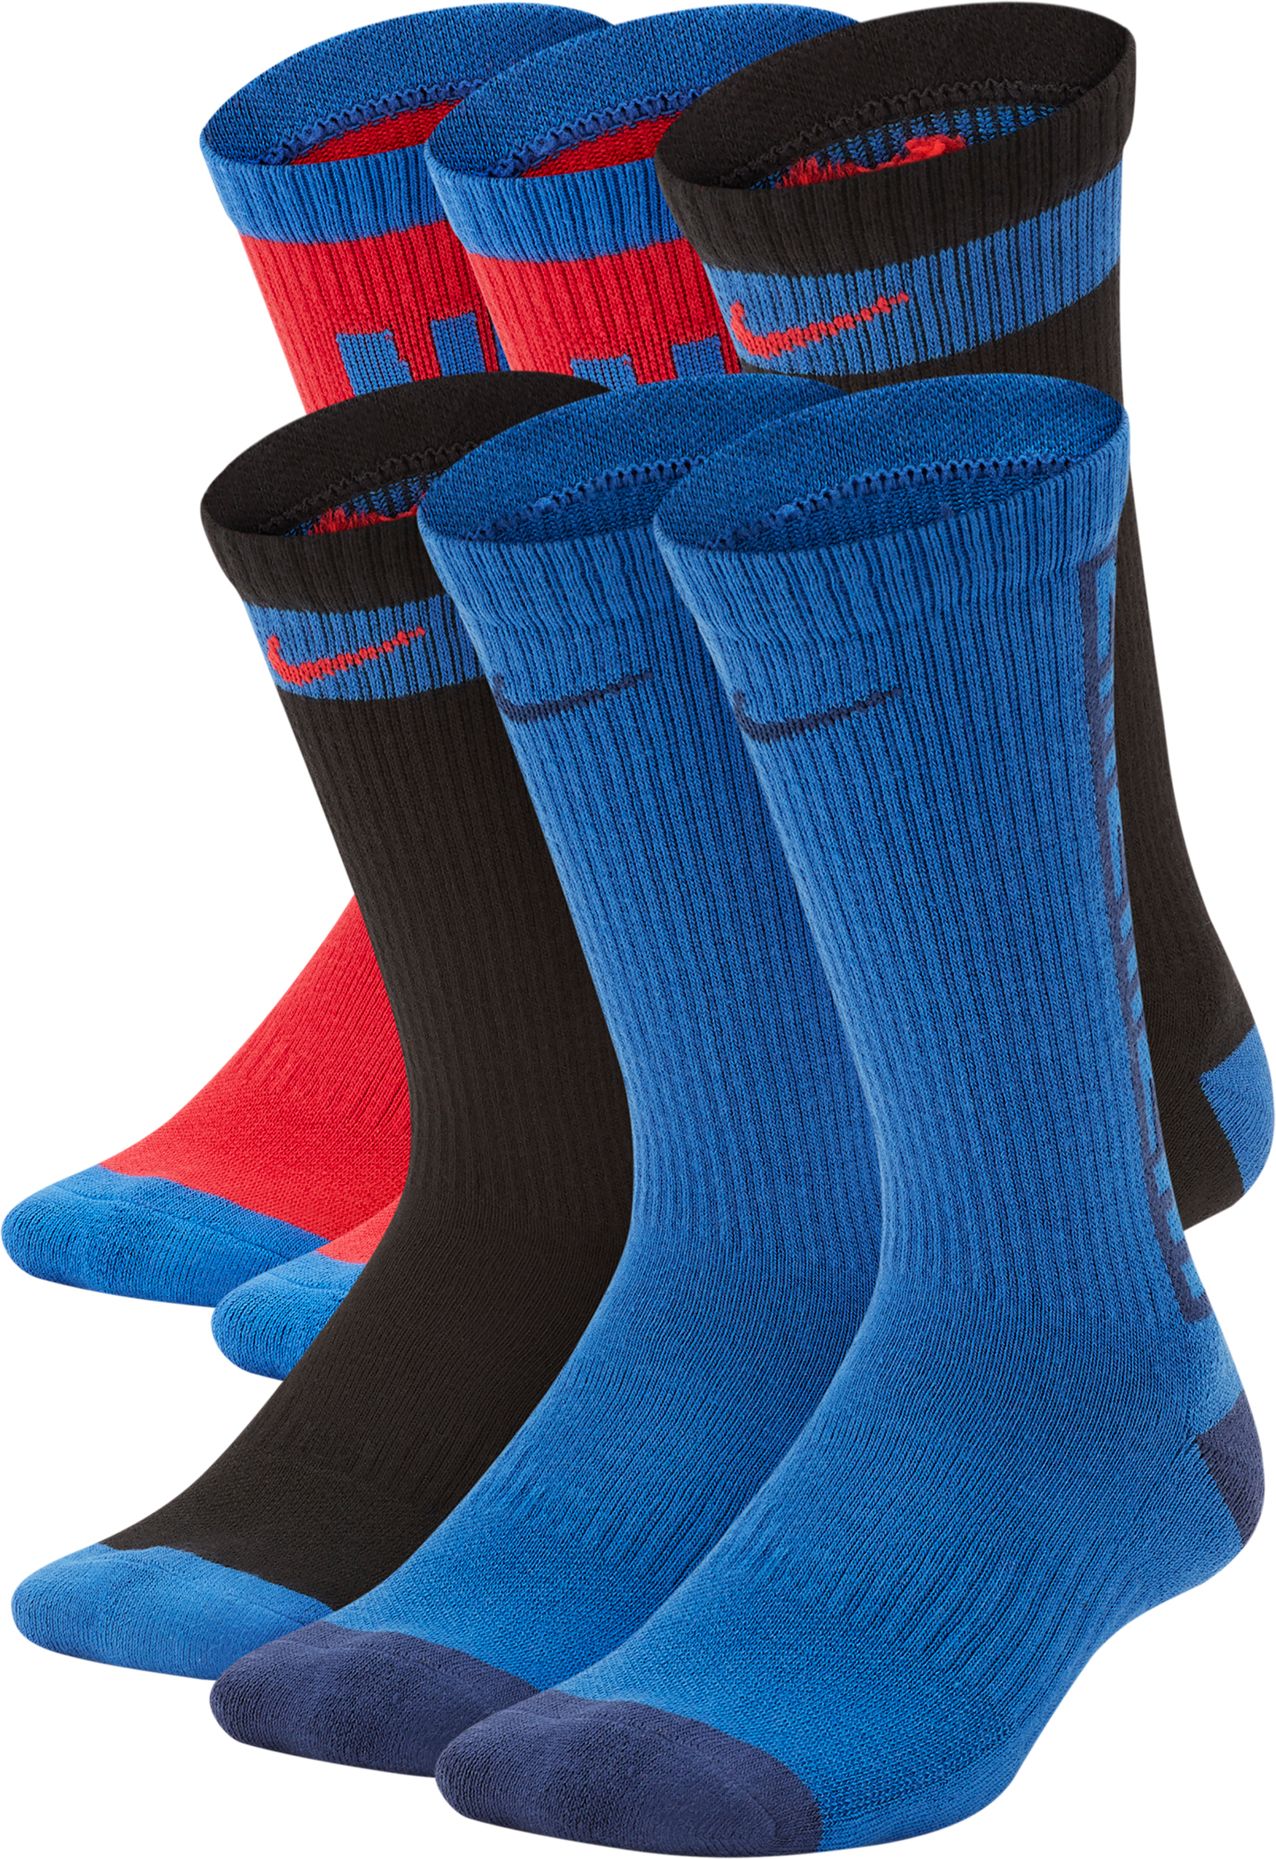 red and blue nike socks